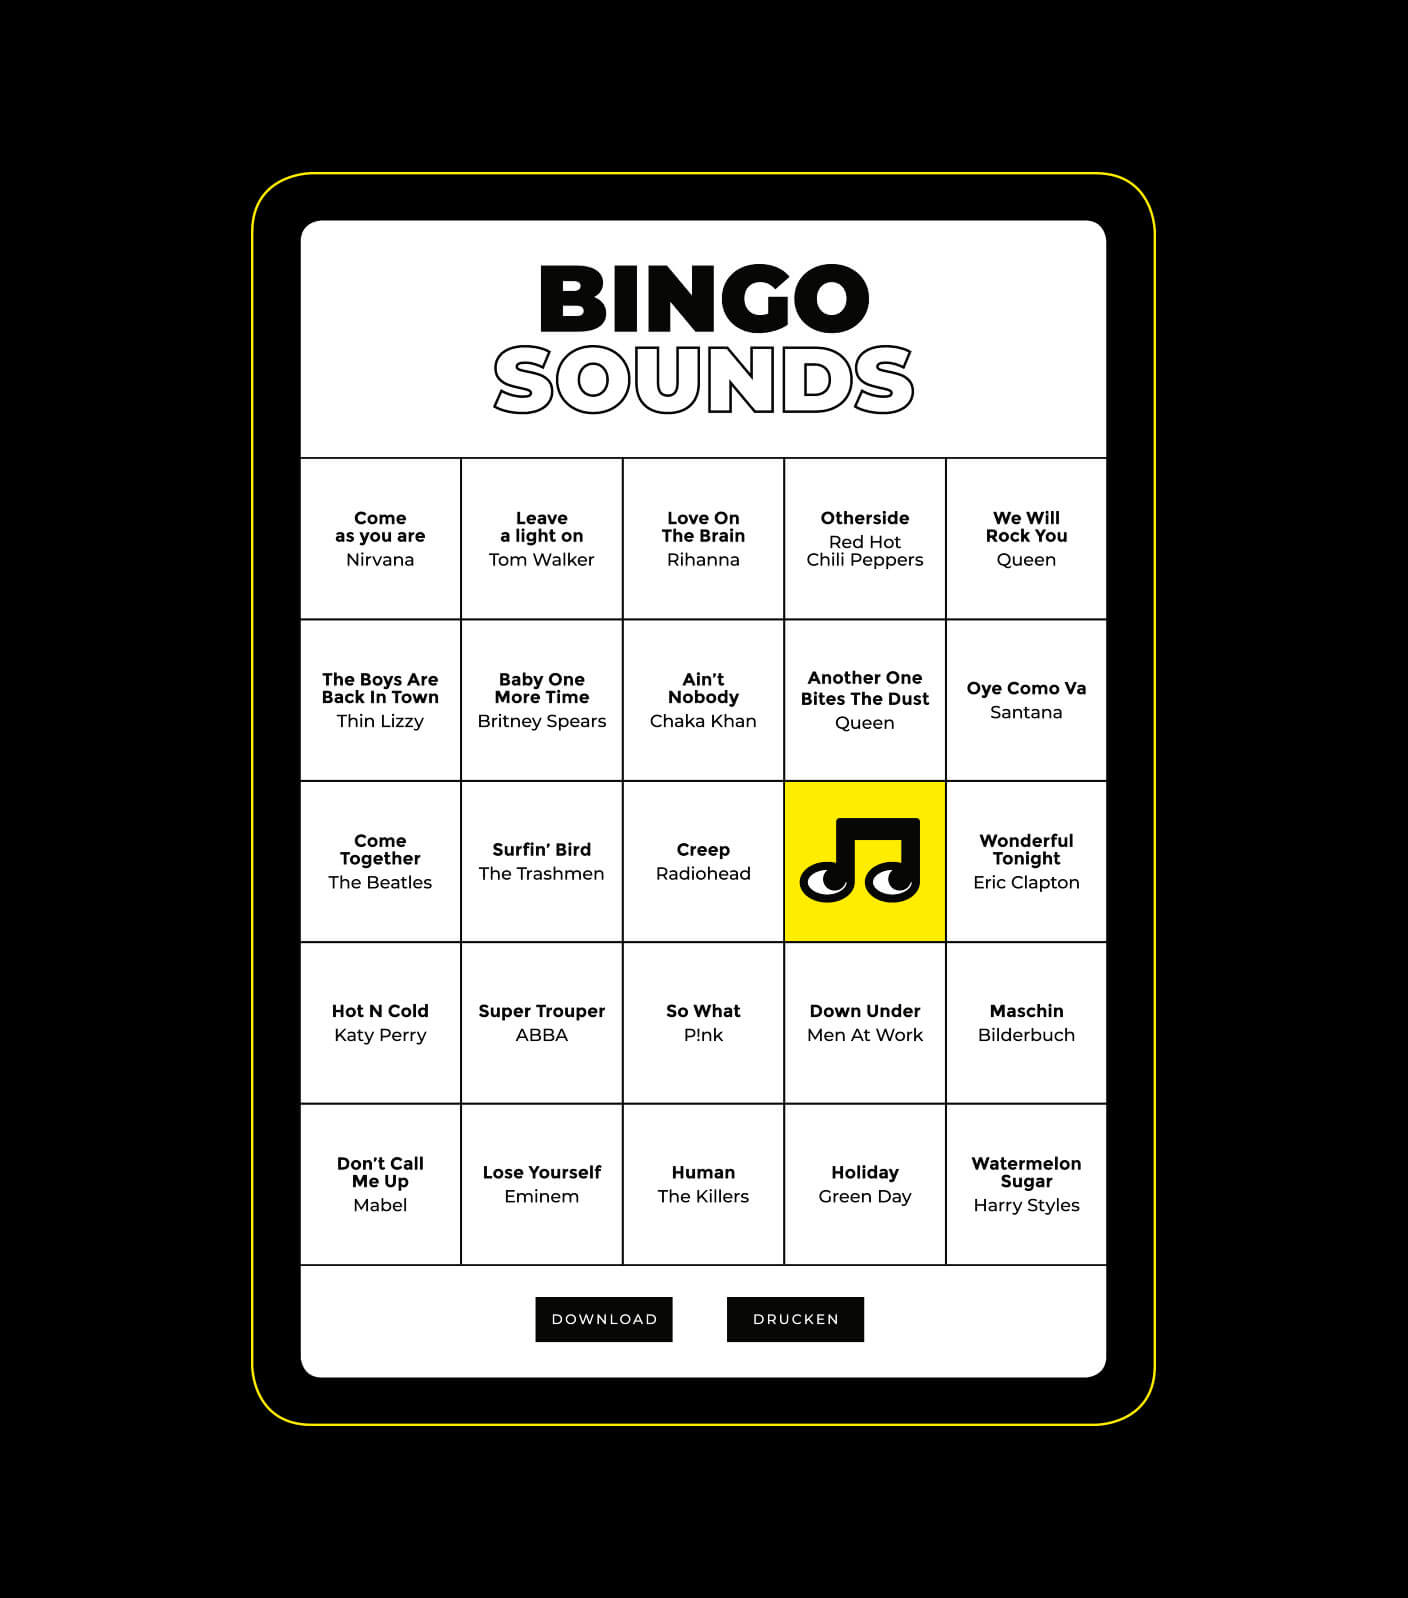 The bingo sheet showing various songs in an ipad mockup.